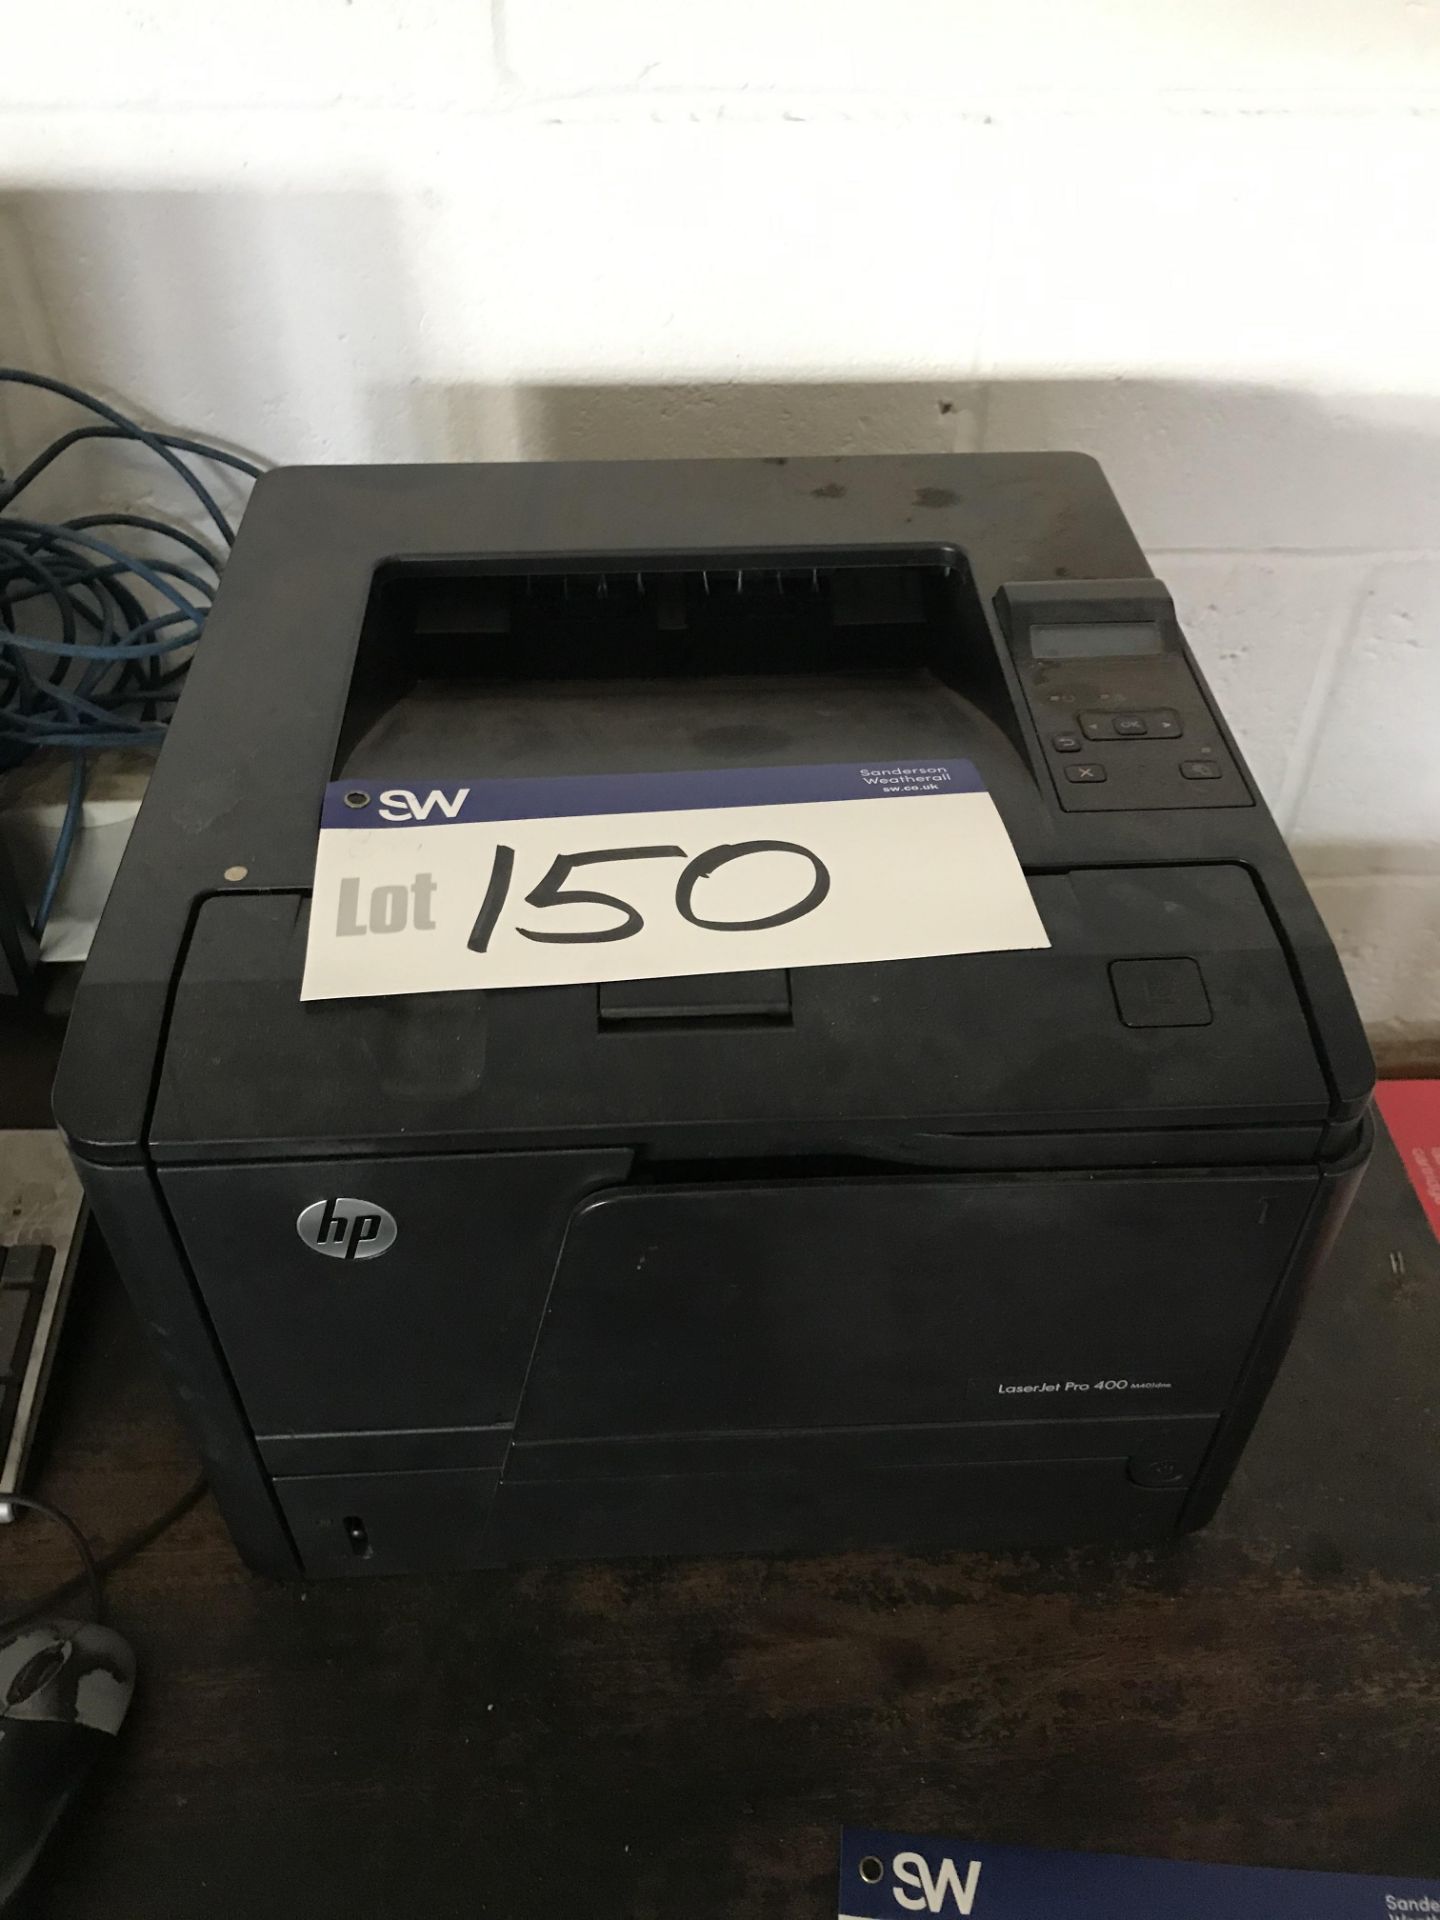 HP LaserJet Pro 401dne Printer